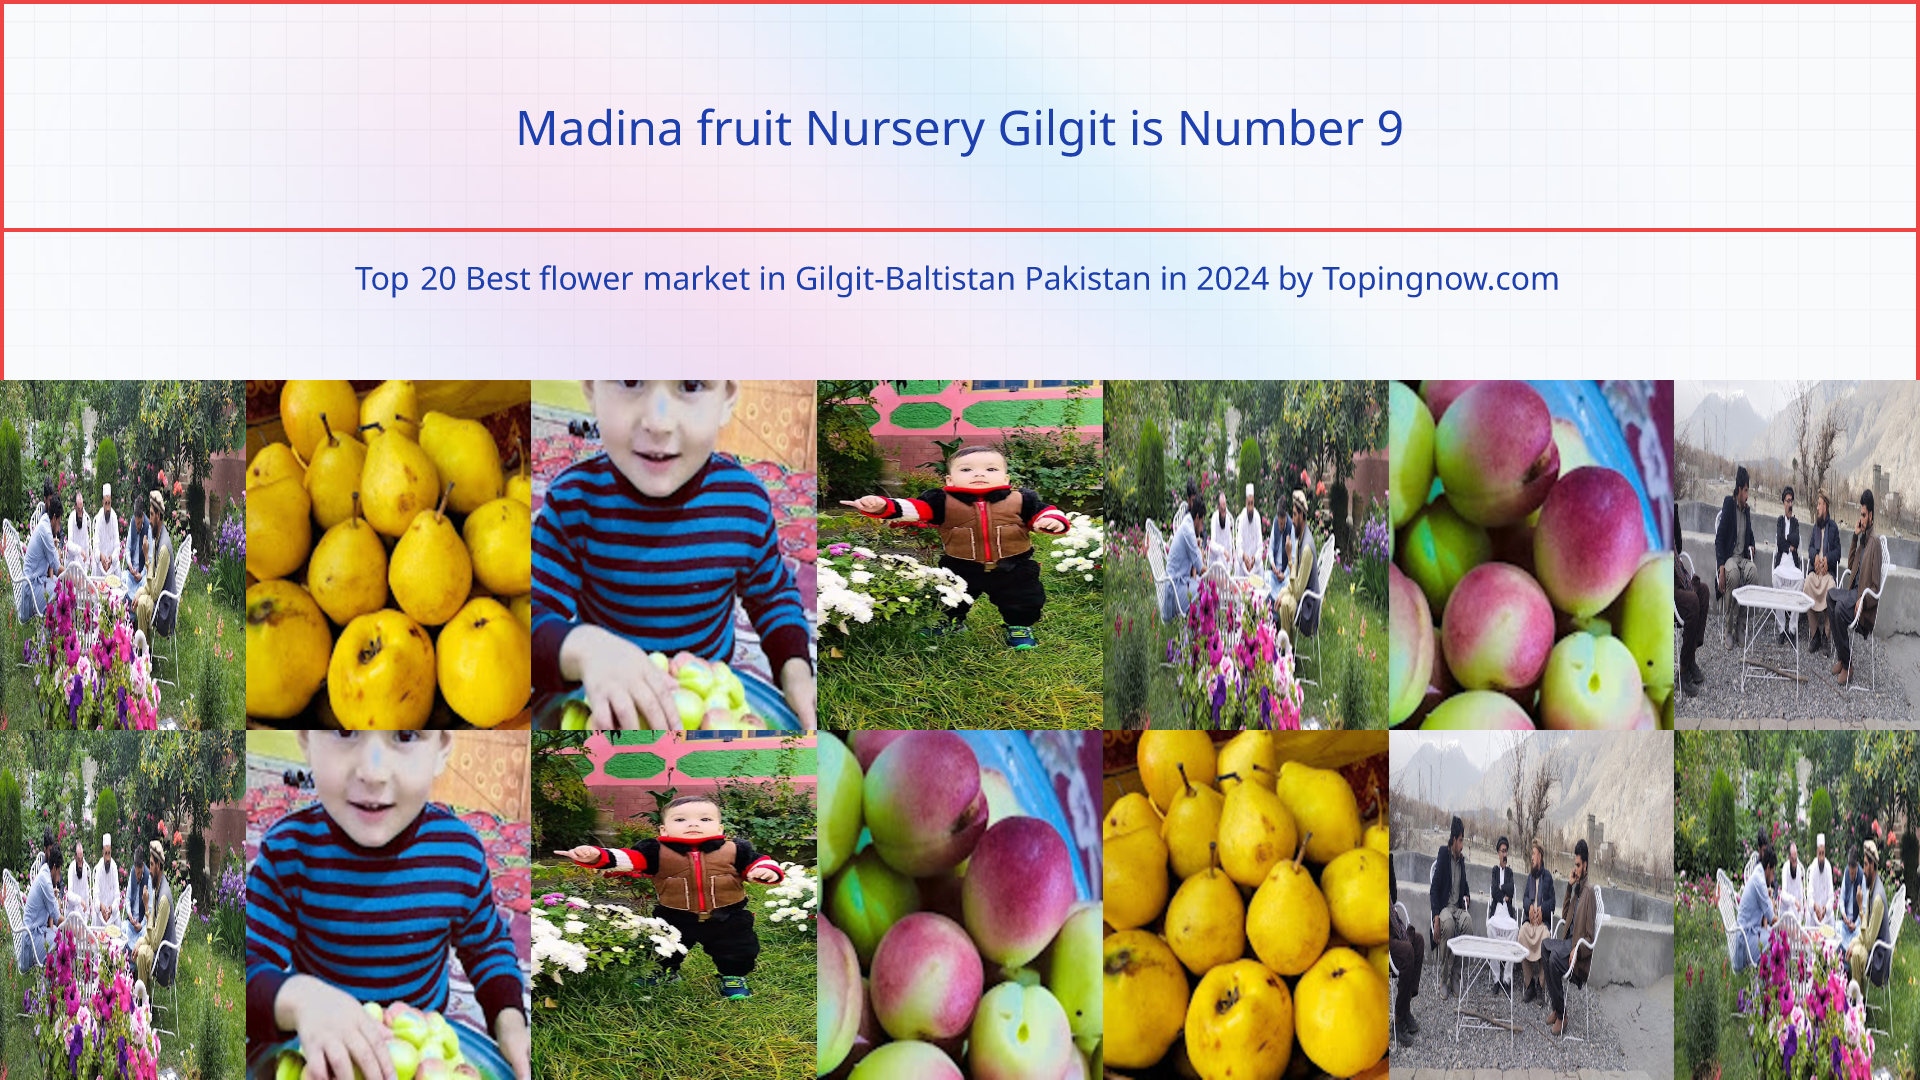 Madina fruit Nursery Gilgit: Top 20 Best flower market in Gilgit-Baltistan Pakistan in 2024